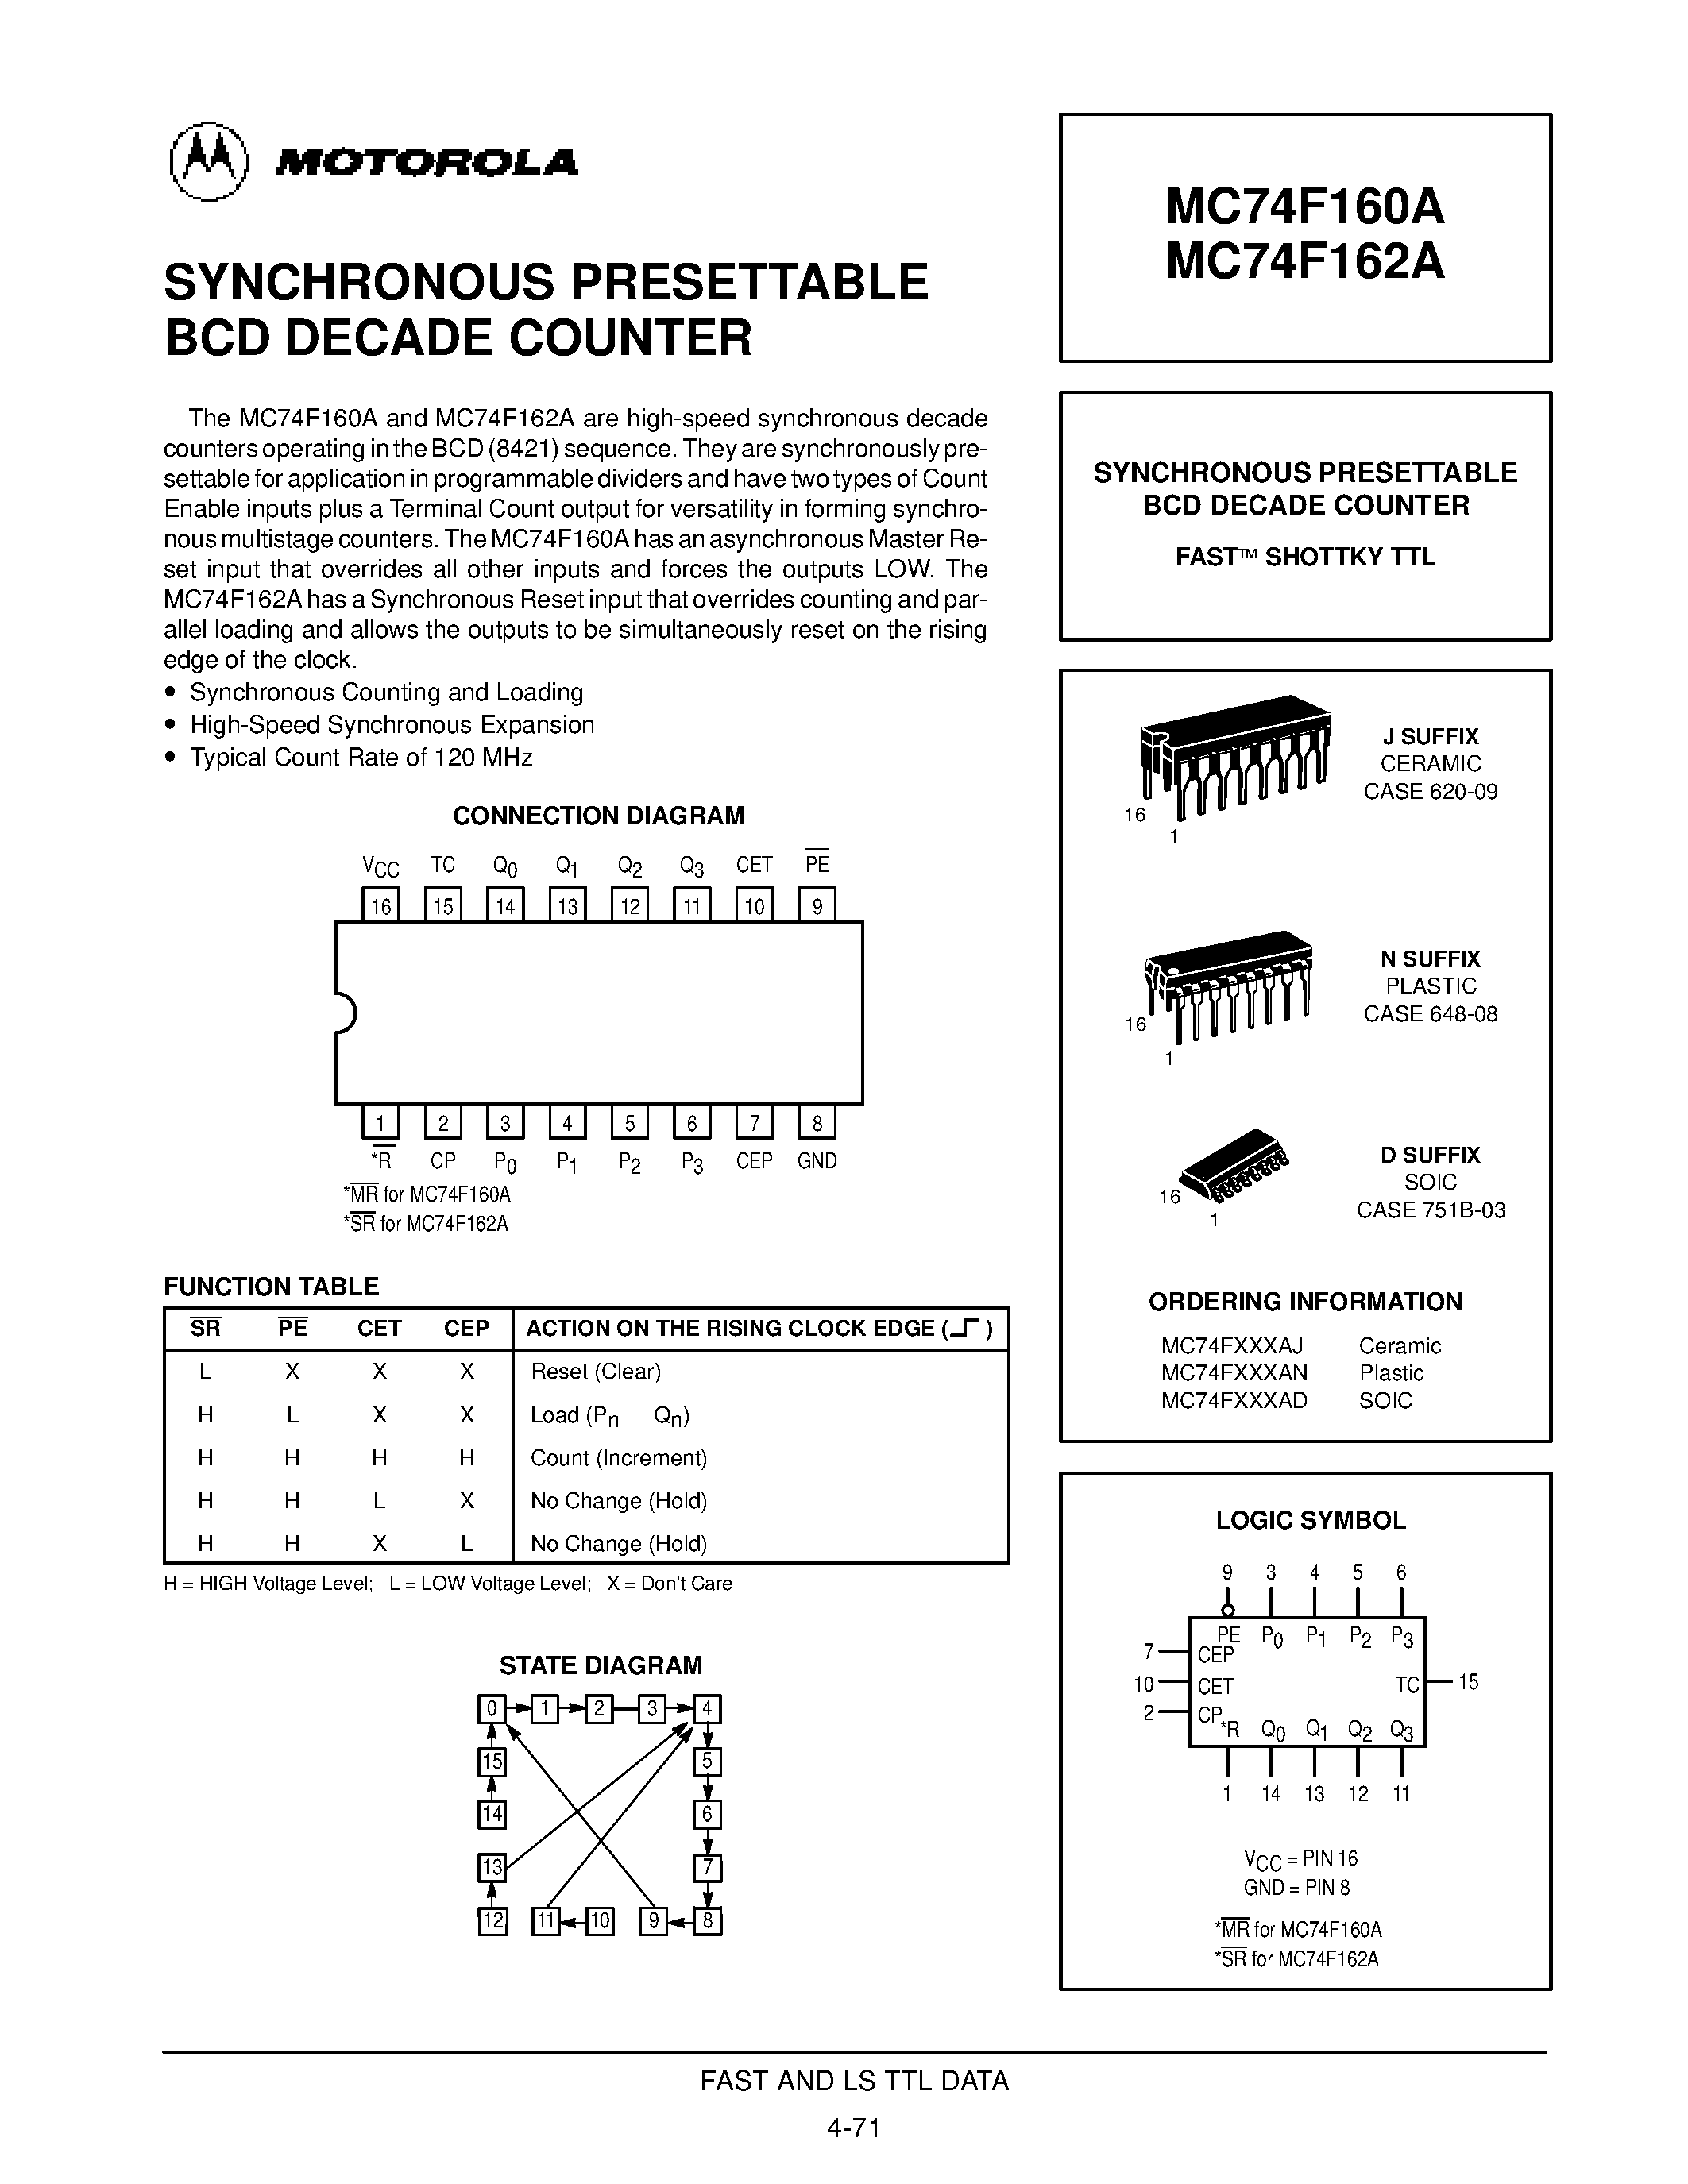 Datasheet MC74F160A - (MC74F160A / MC74F162A) SYNCHRONOUS PRESETTABLE BCD DECADE COUNTER page 1